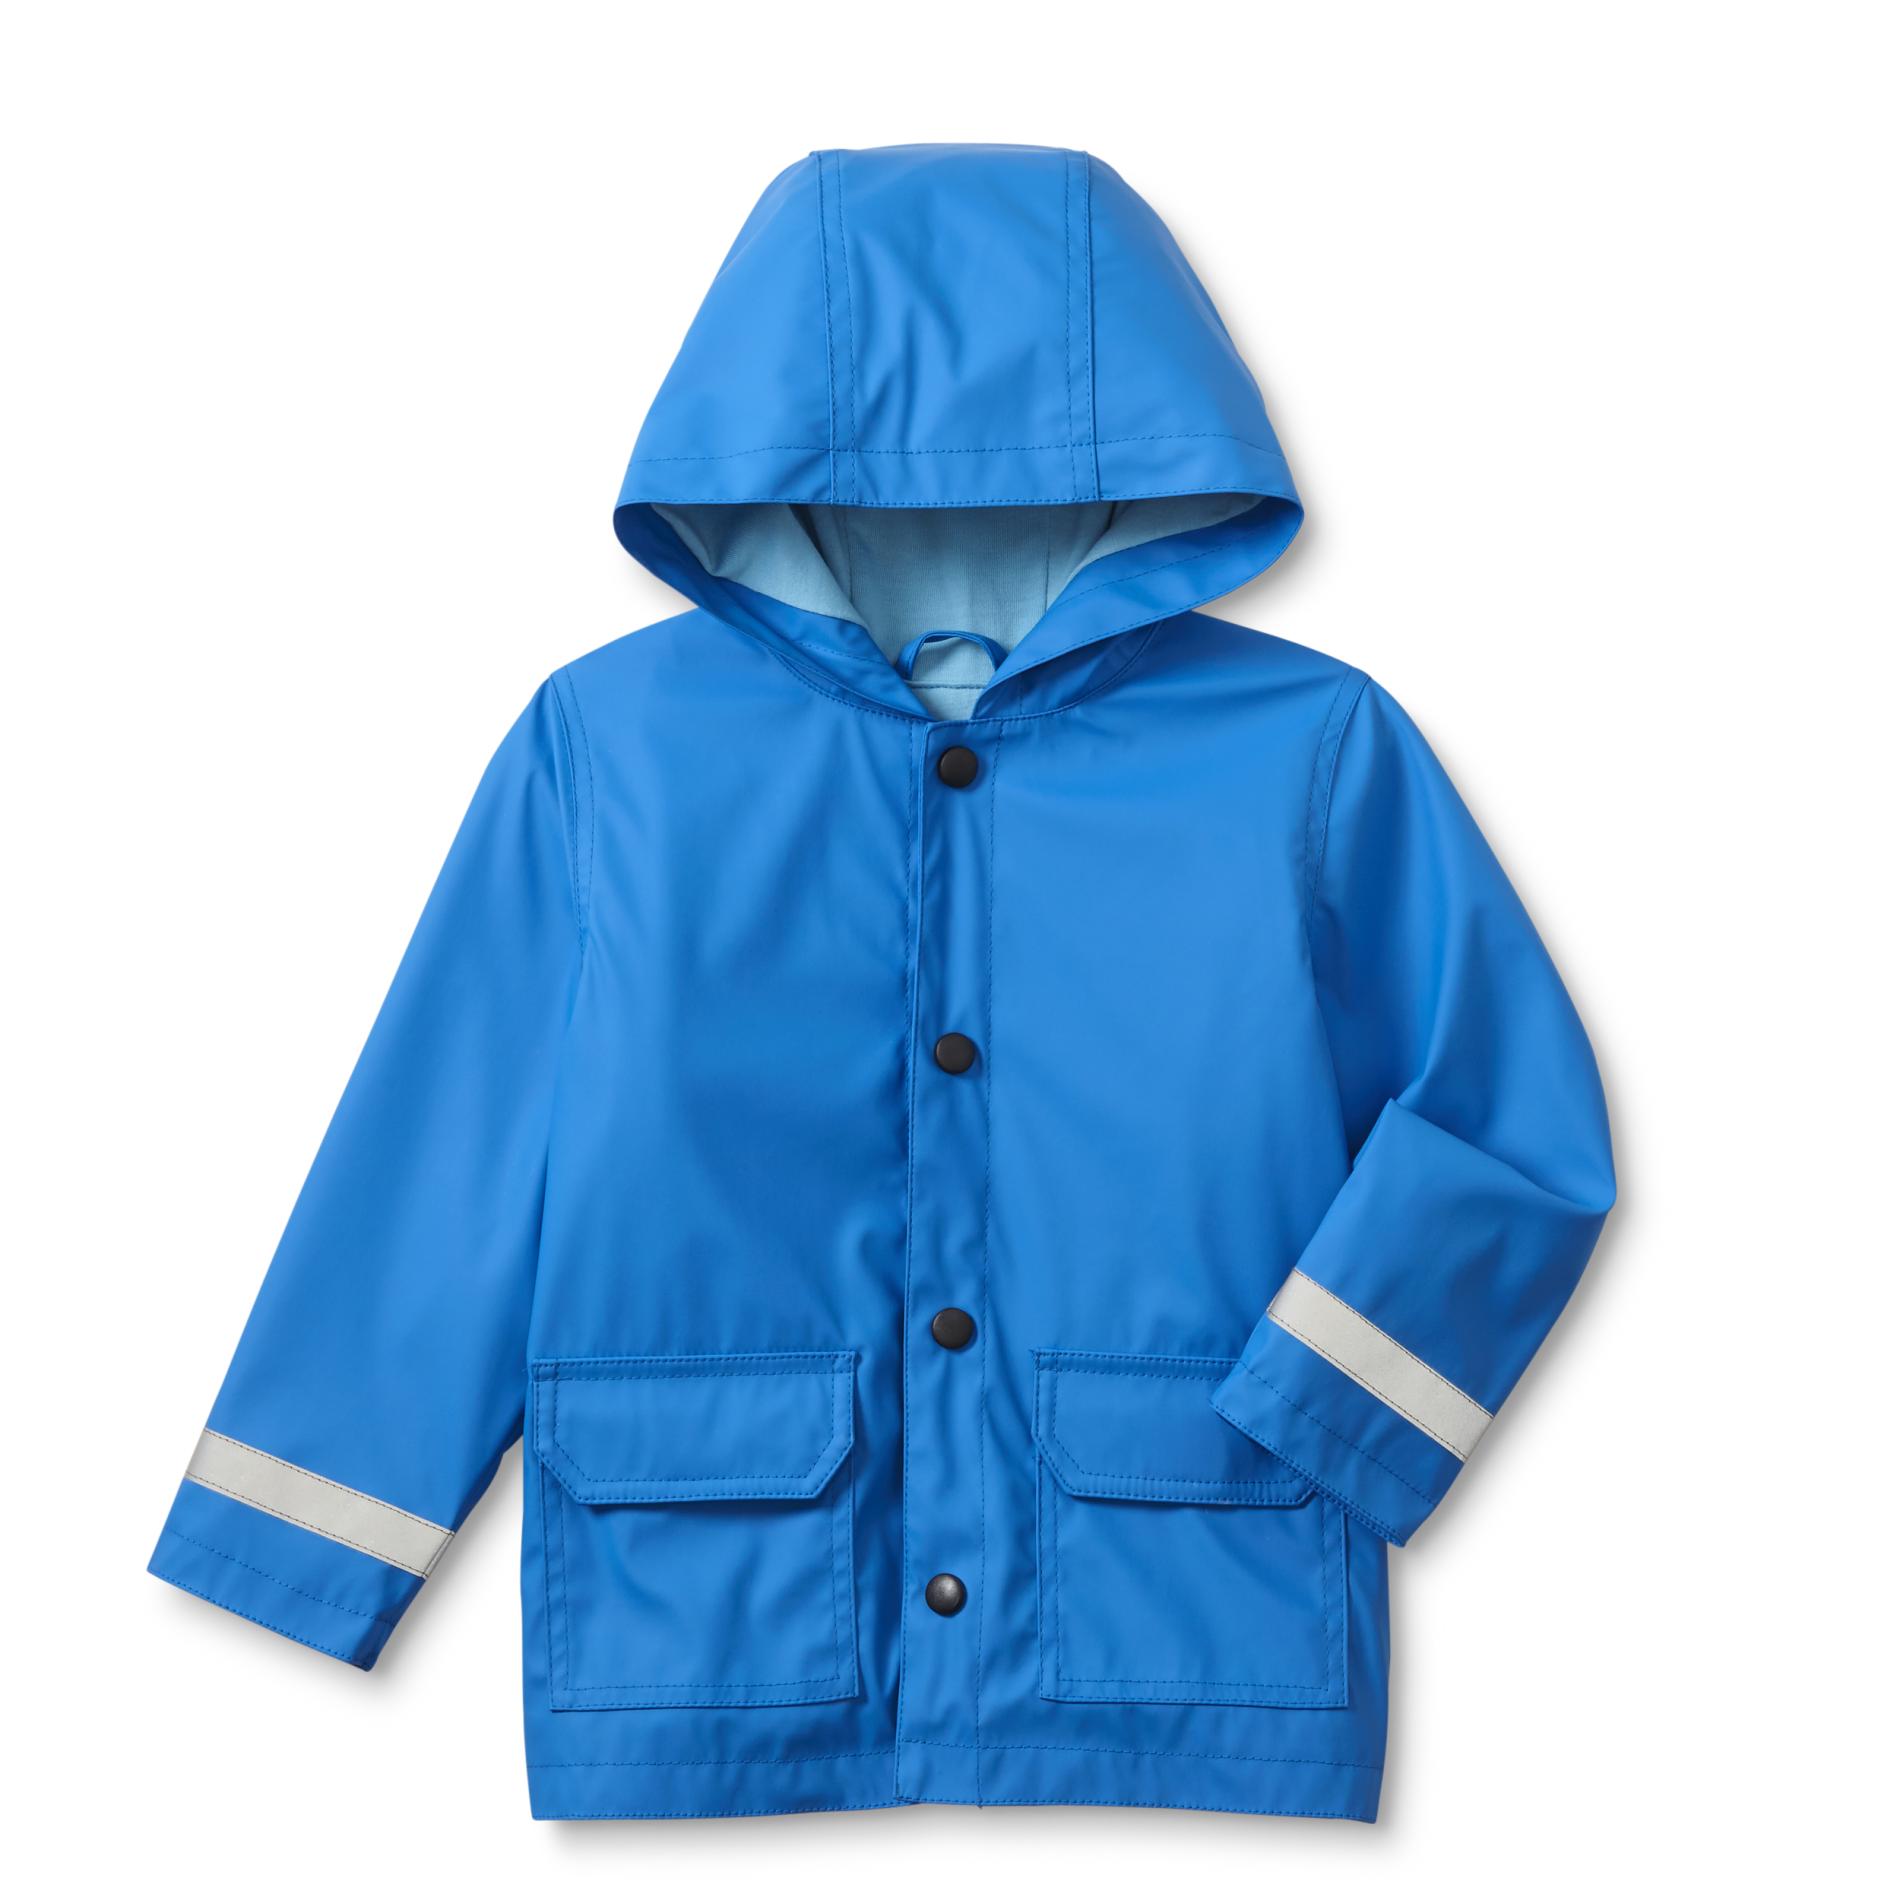 WonderKids Toddler Boy's Hooded Raincoat